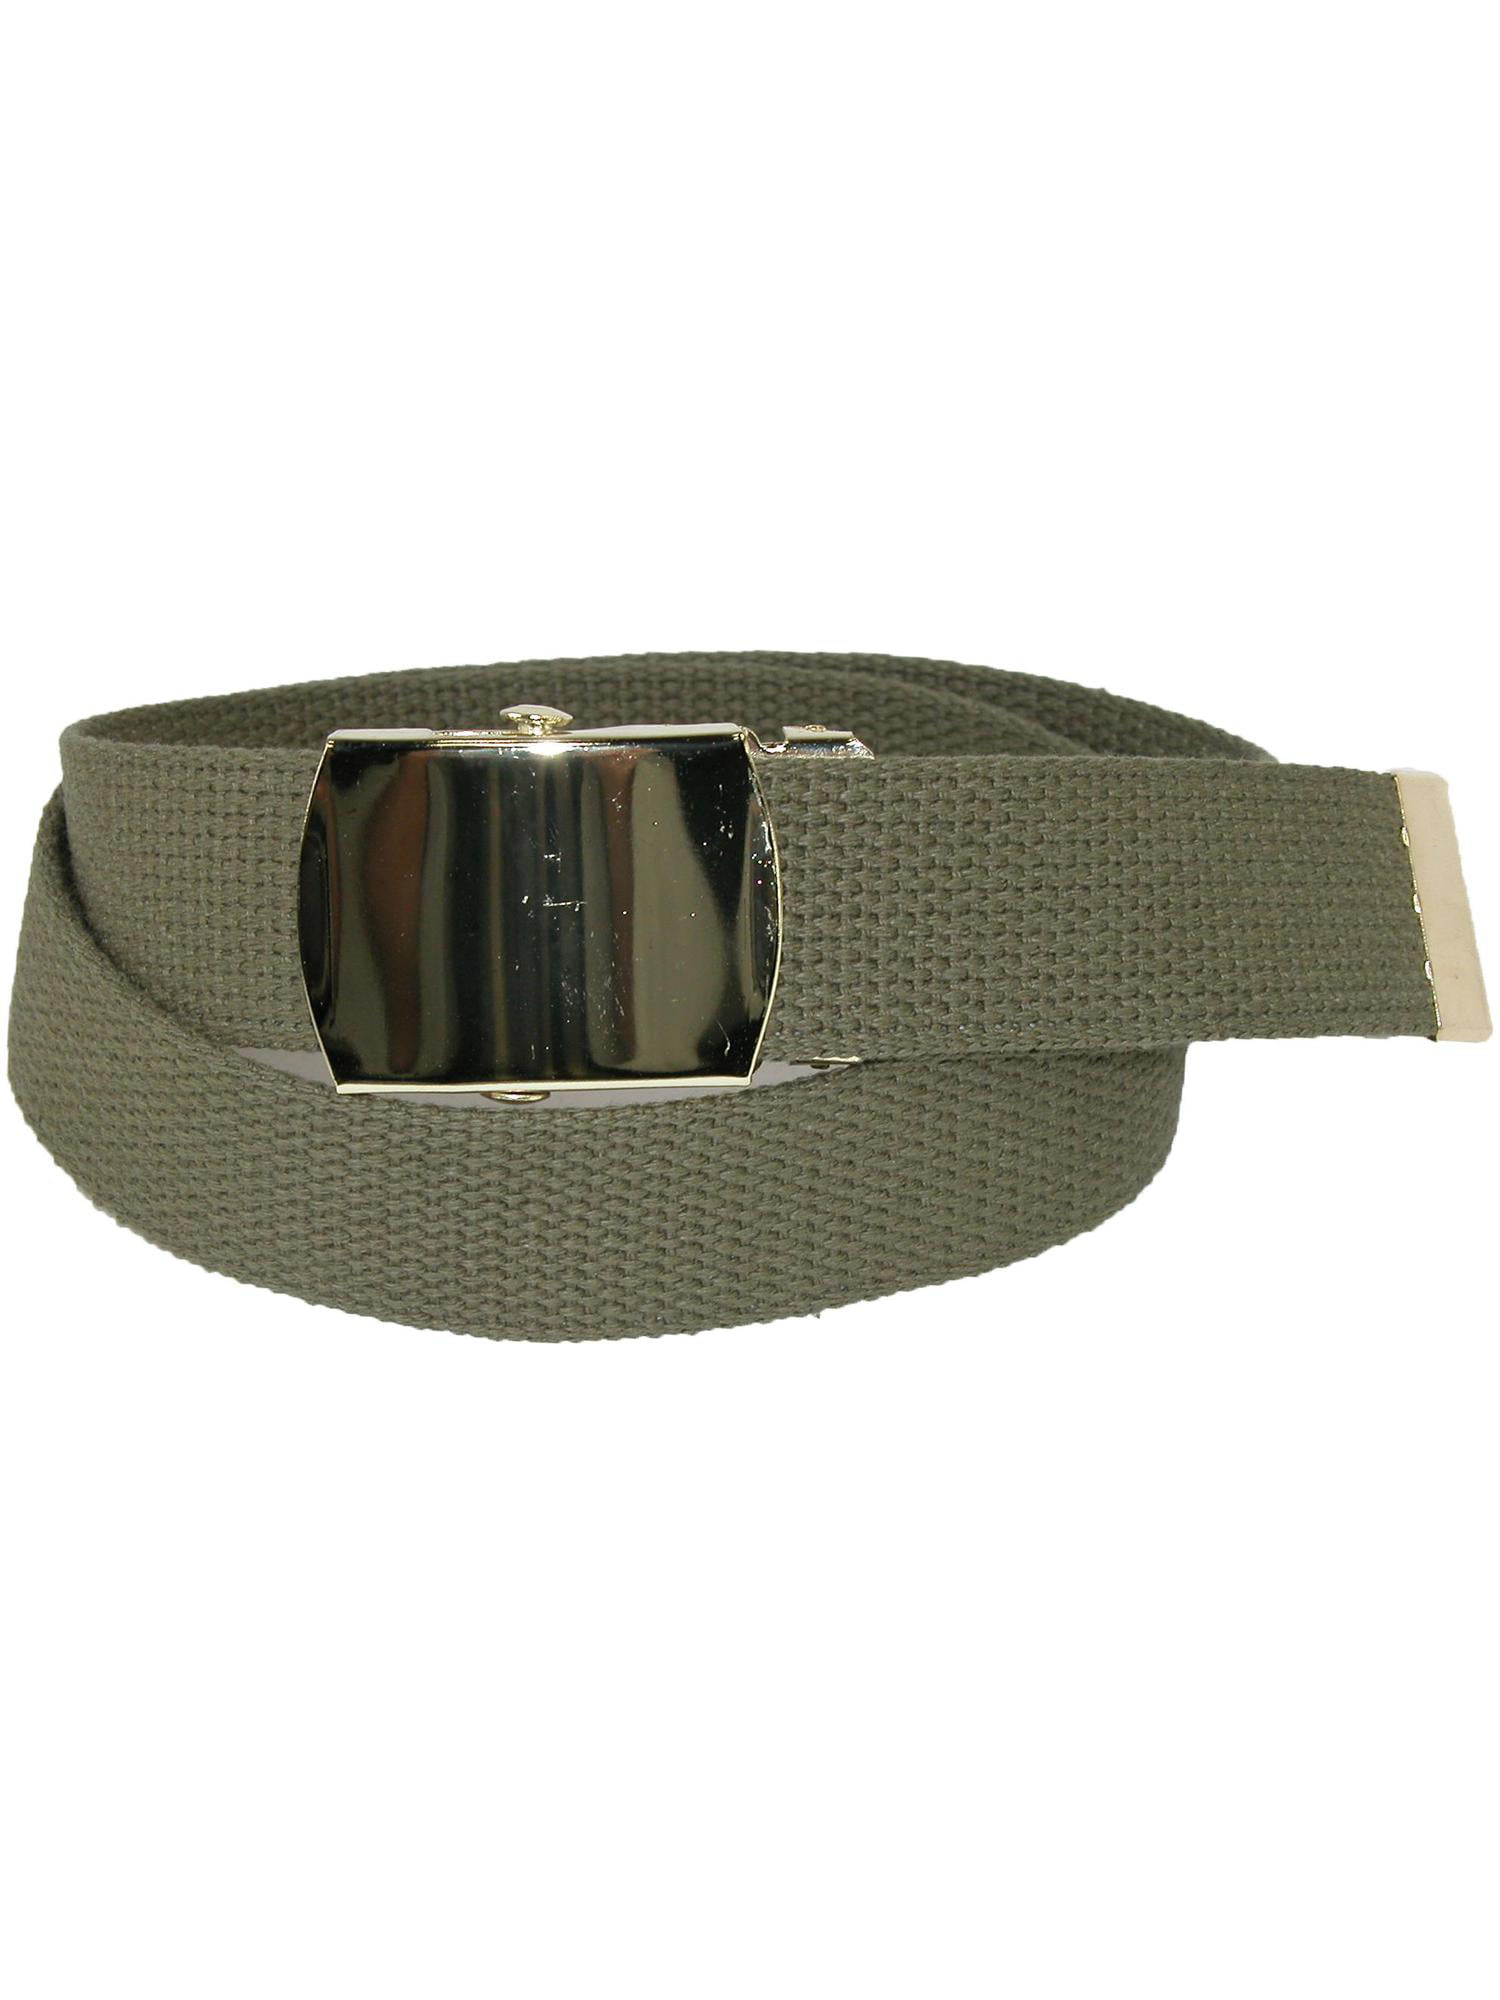 2 Belts Canvas Cotton Vintage Military Web Metal Buckle USMC Marine Khaki Jean 